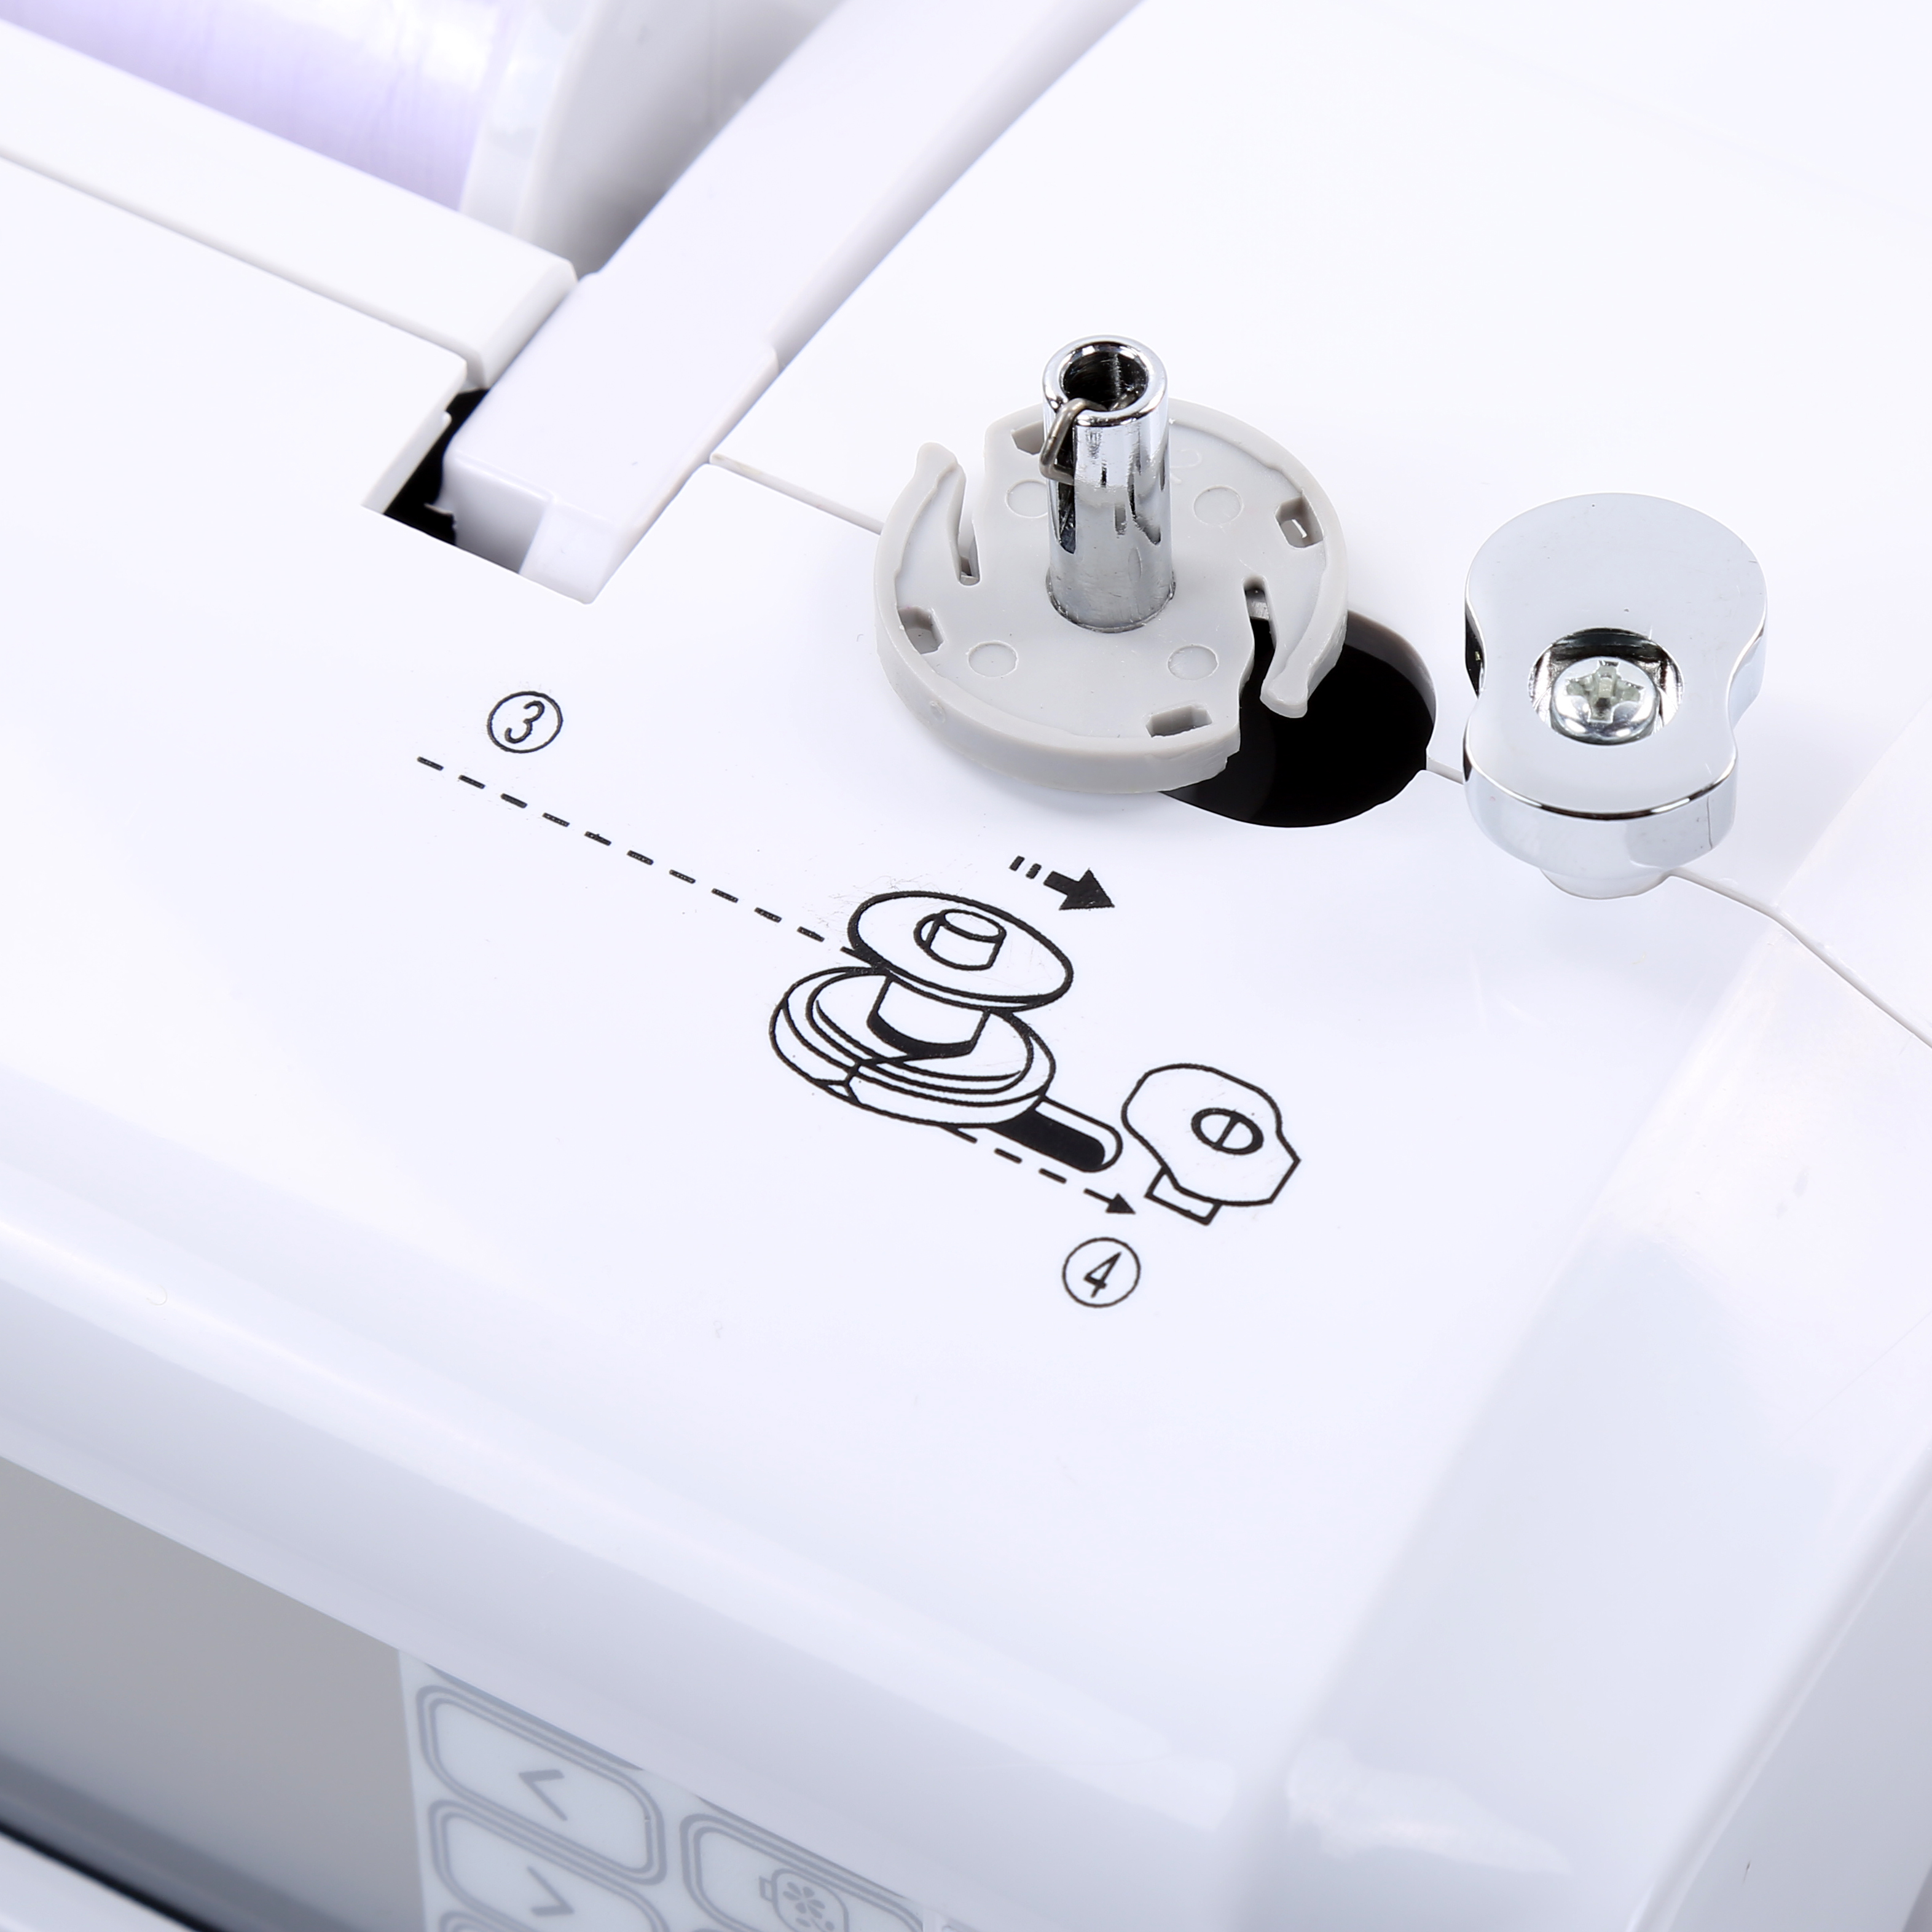 BAI Cheap Coverstitch Sewing Machine for Walking Foot Sewing Machine